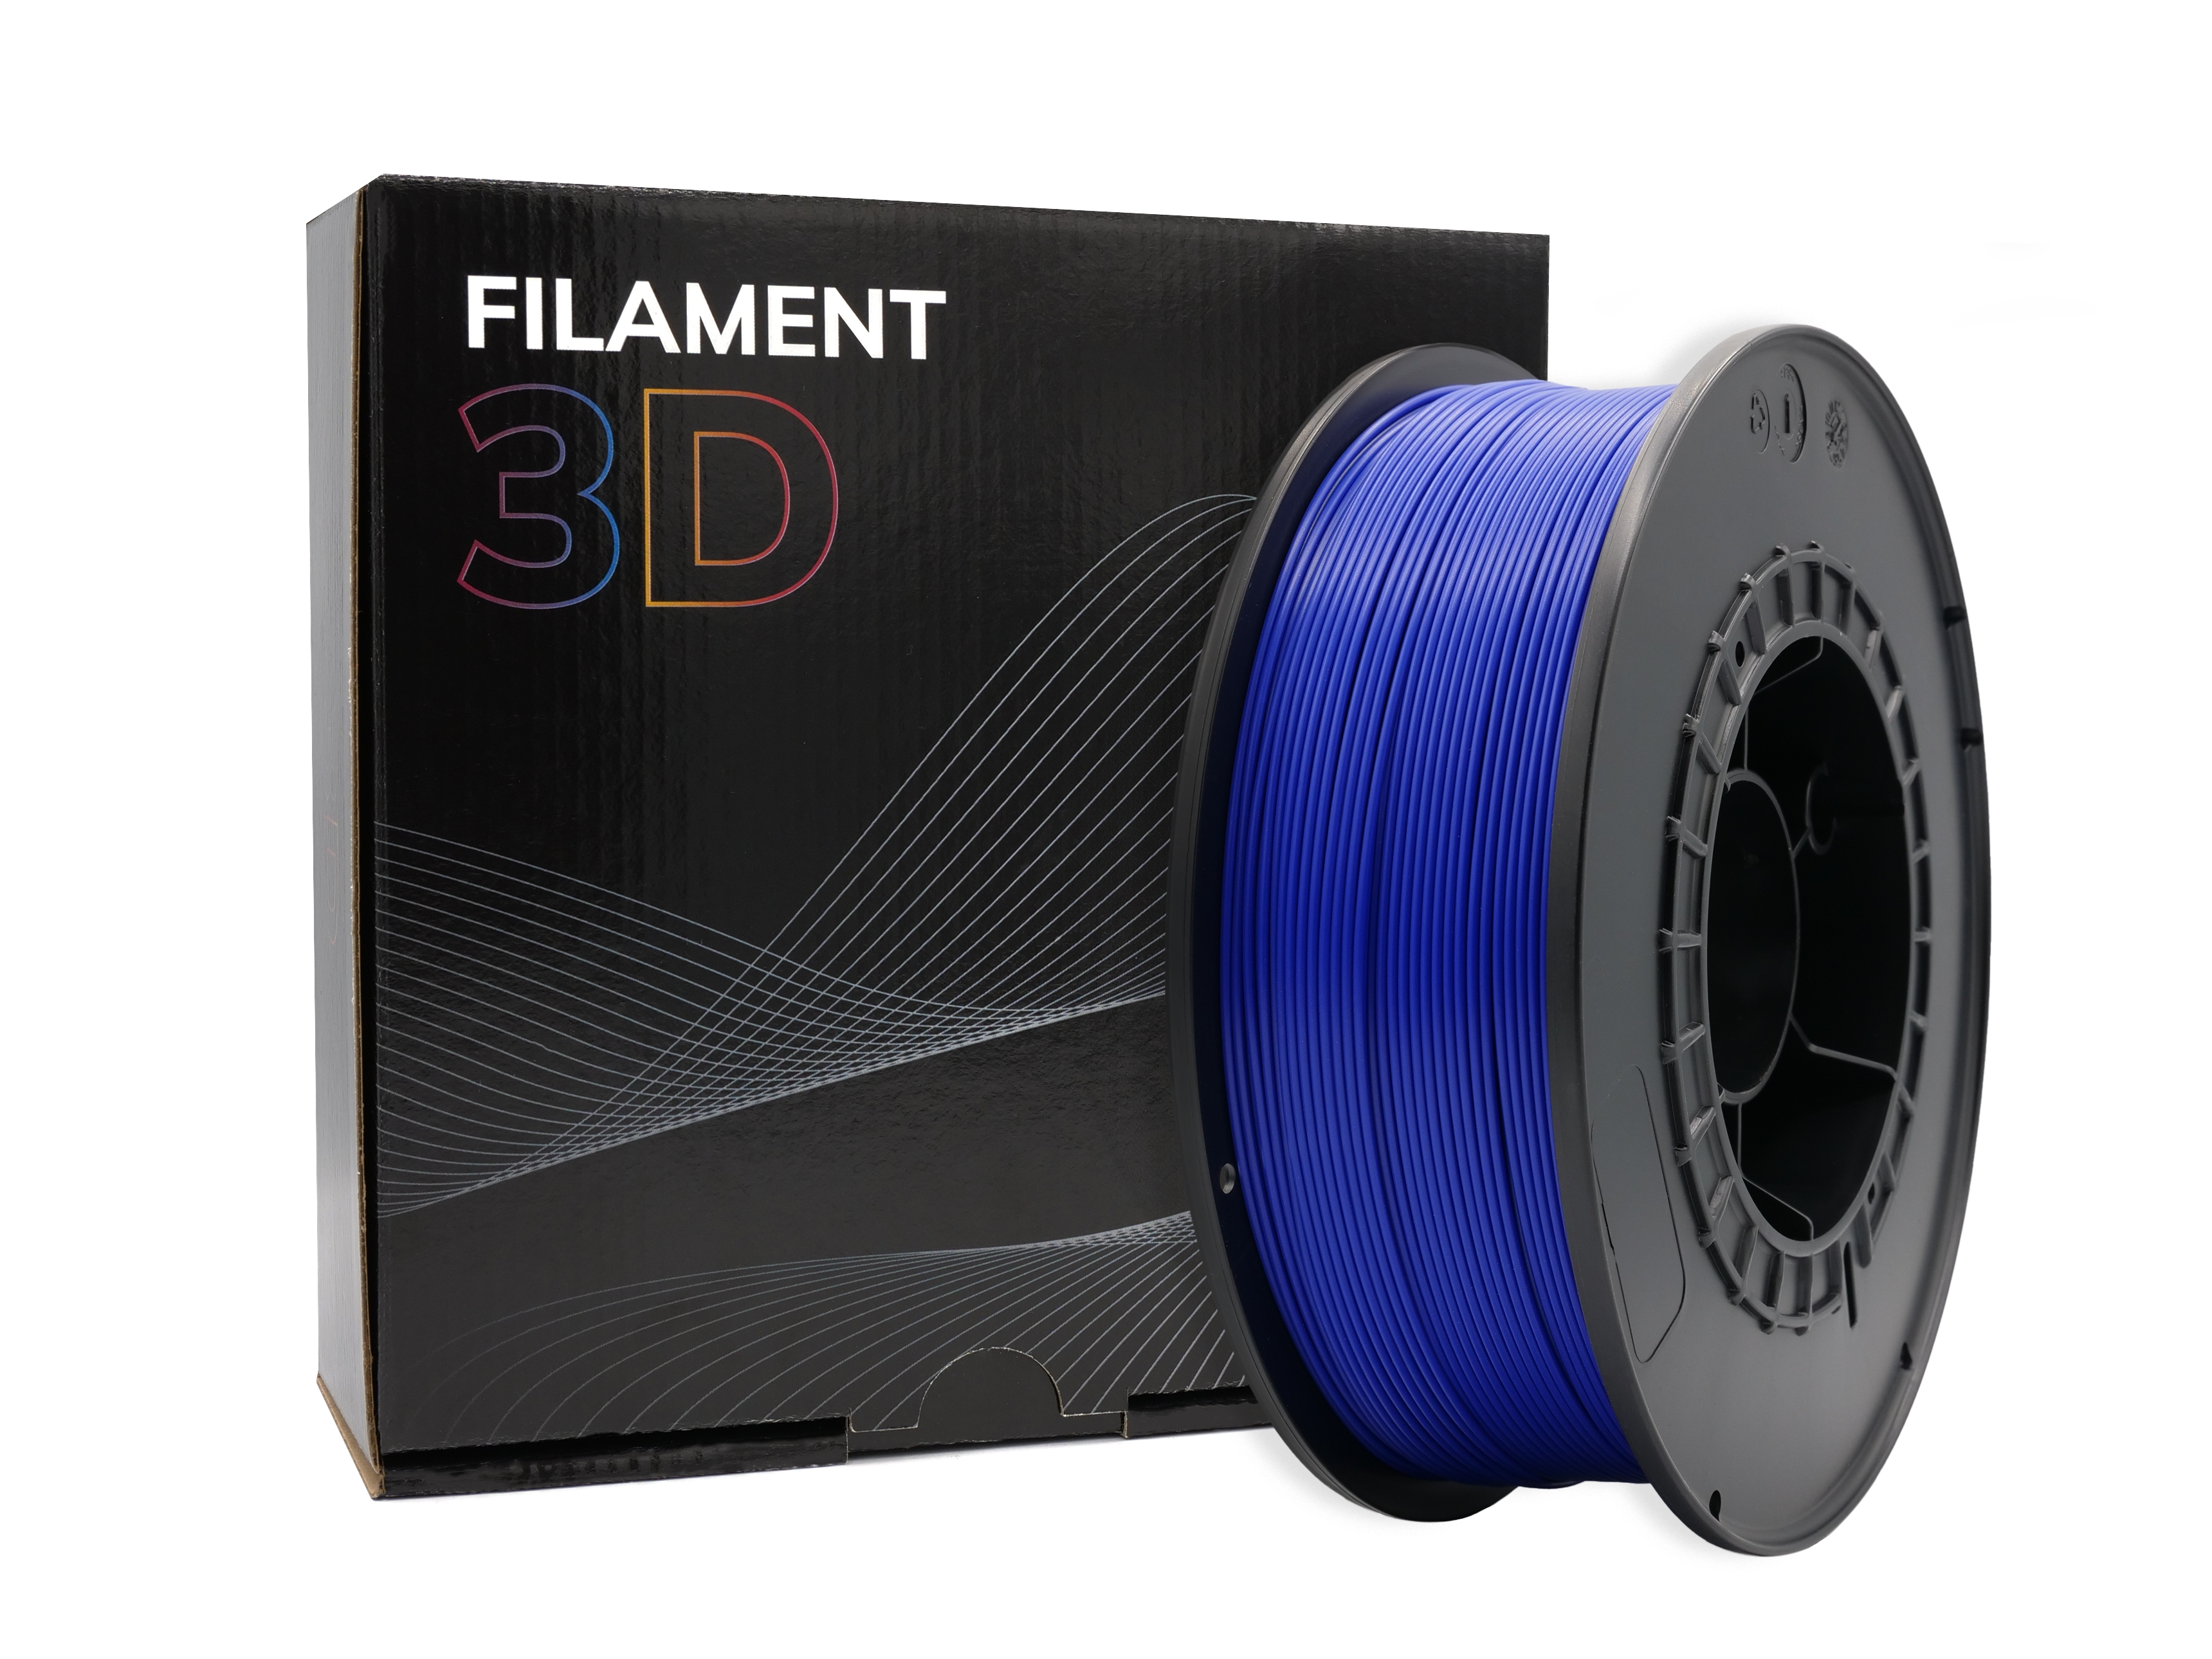 Bobine de fil PLA 1.75 mm biodégradable imprimante 3D Bleu